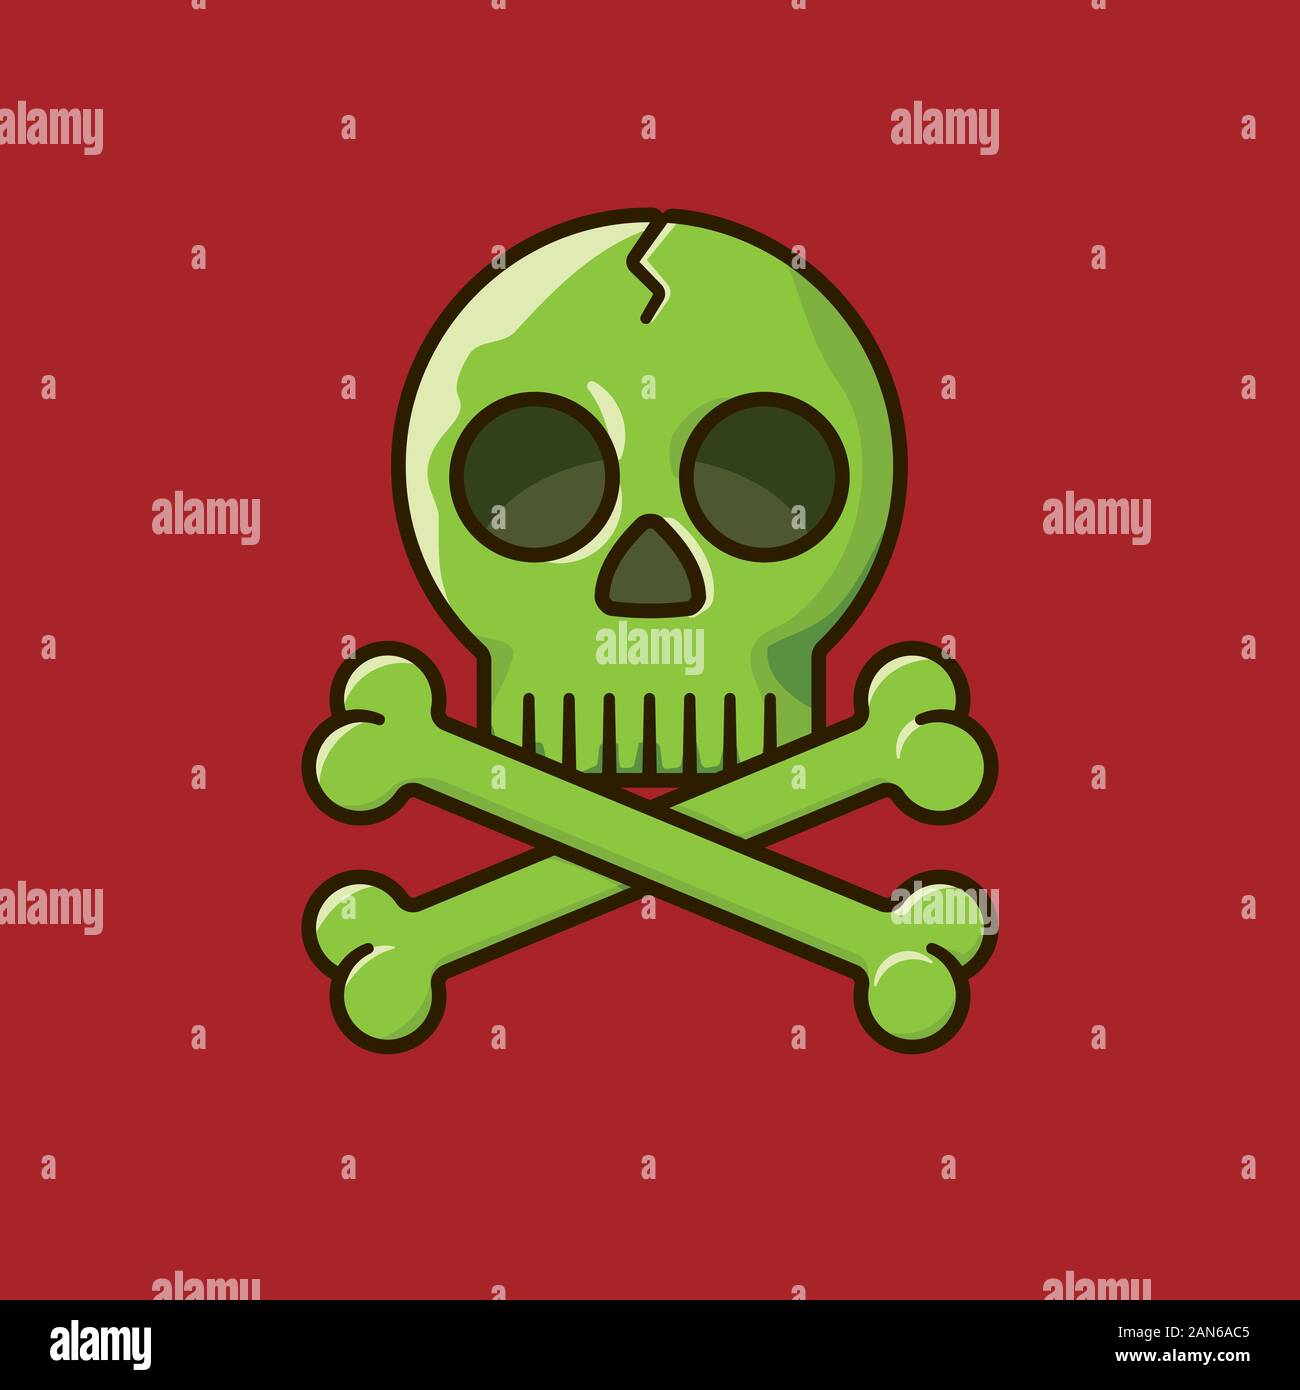 Green skull and crossed bones on red background vector illustration Stock Vector